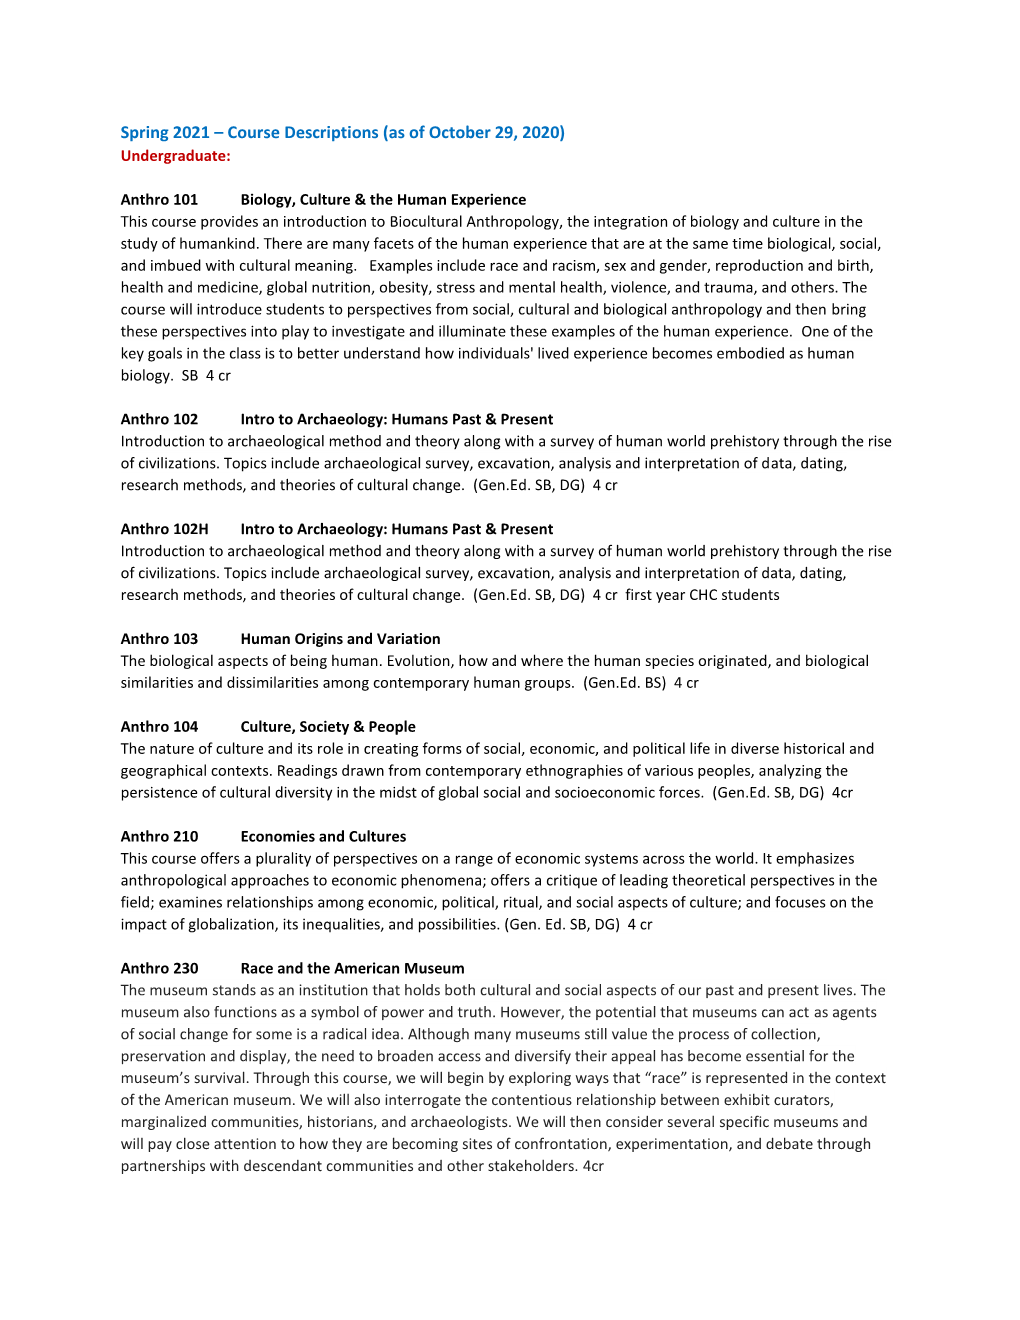 Spring 2021 – Course Descriptions (As of October 29, 2020) Undergraduate